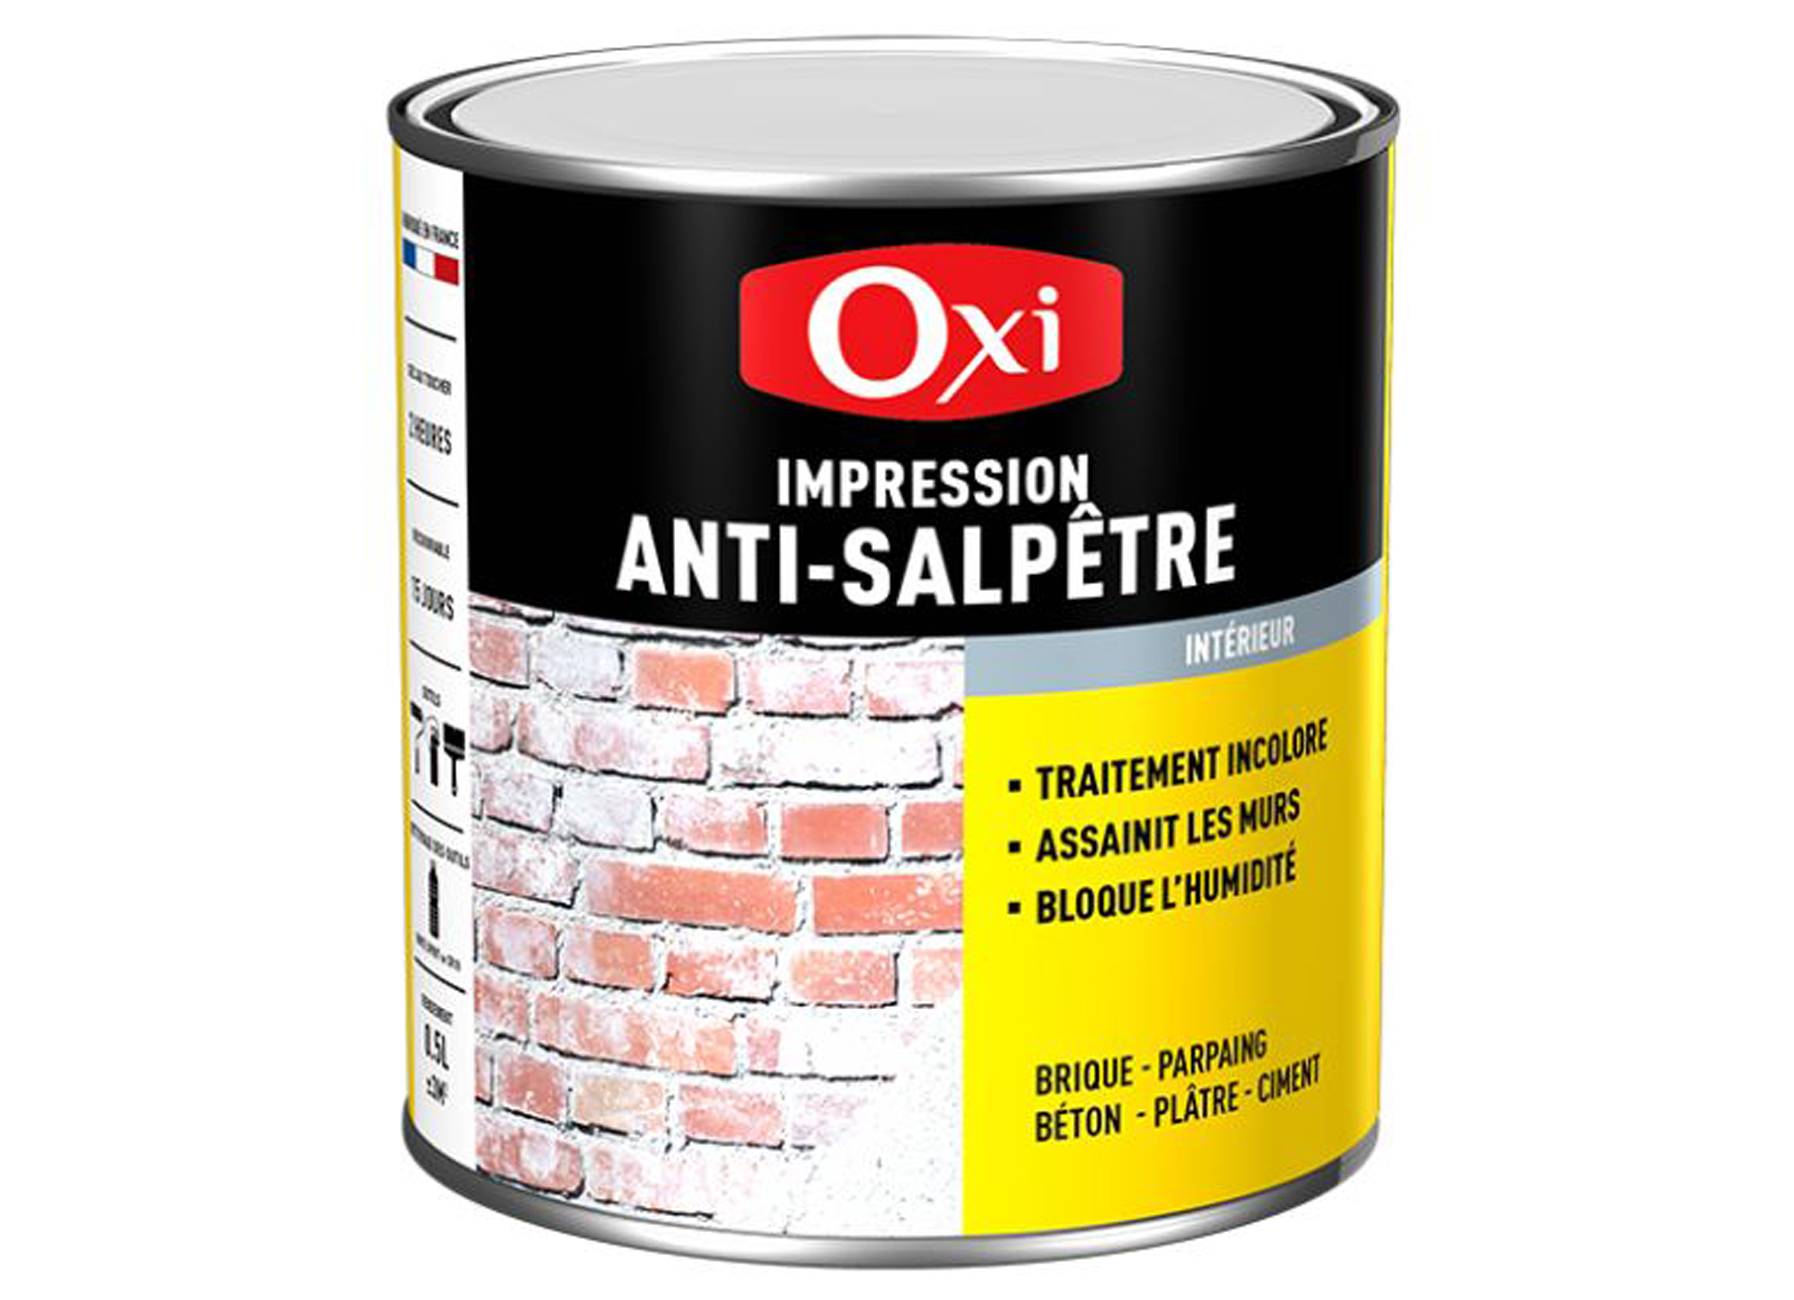 OXI IMPRESSION ANTI-SALPETRE 2,5L